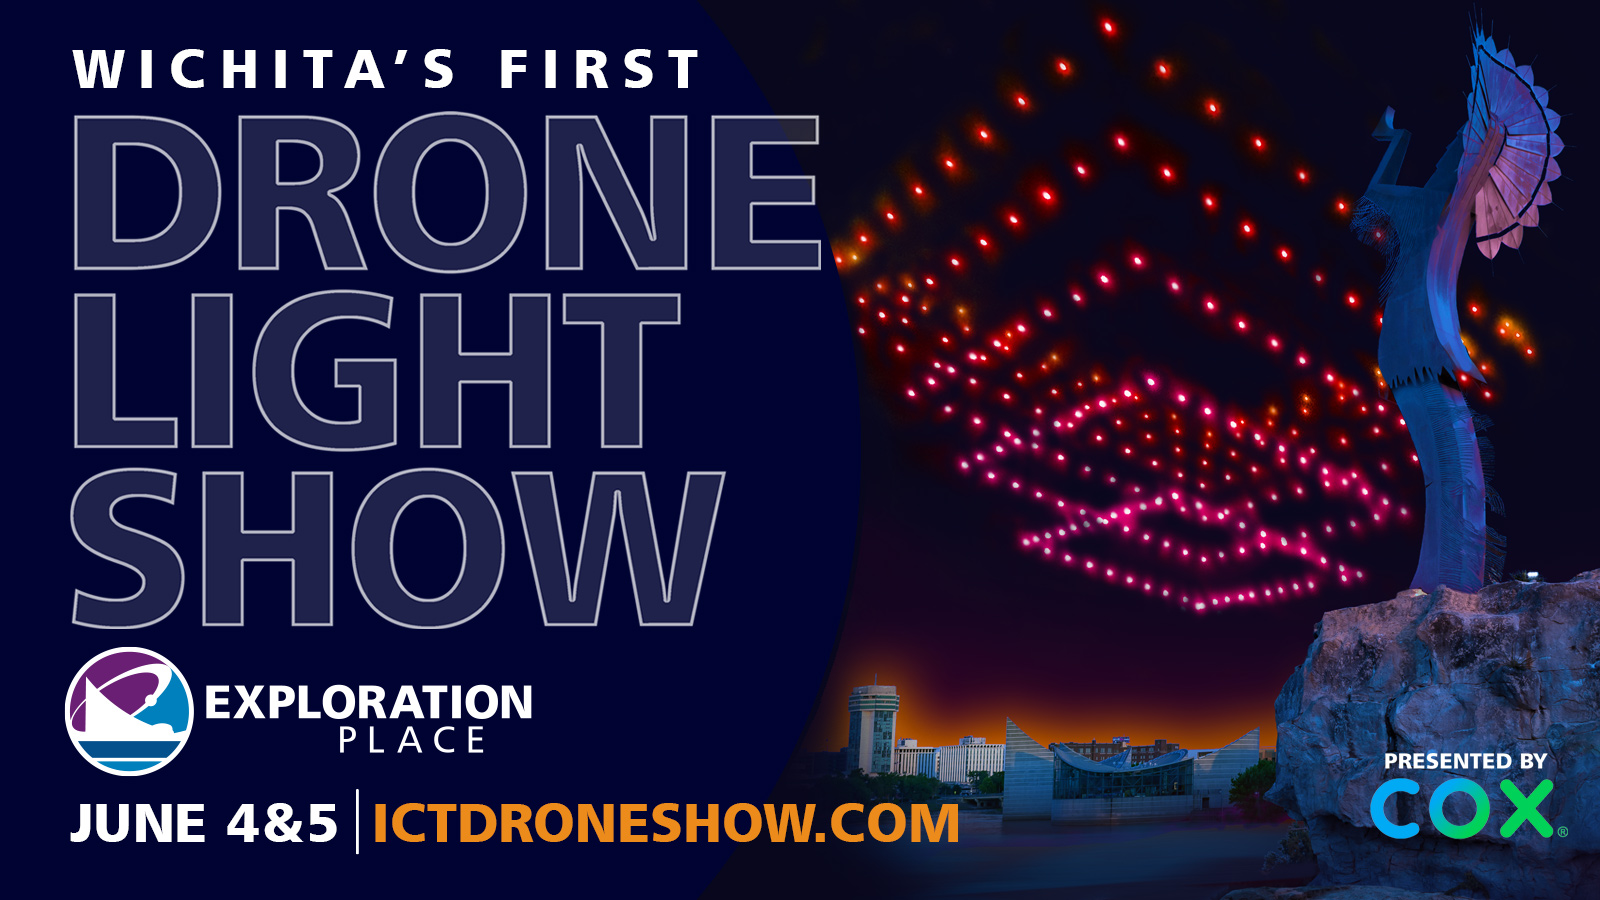 Wichita's First Drone Light Show